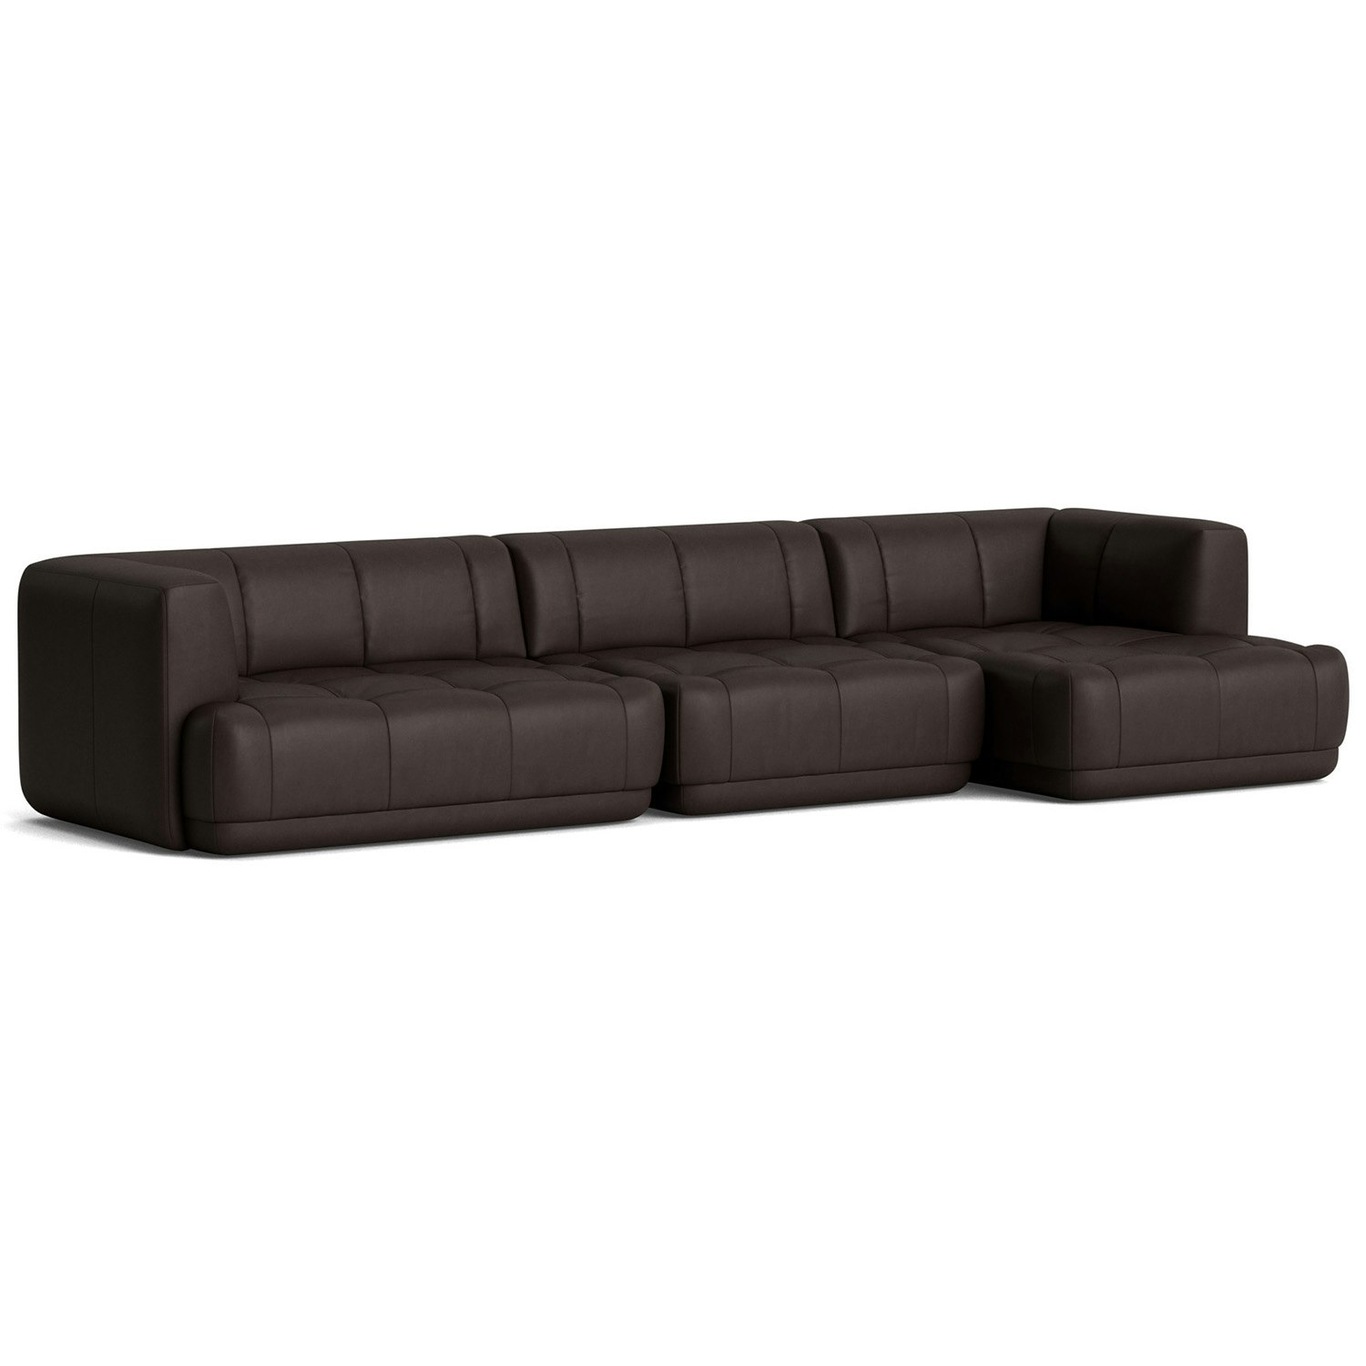 Quilton 4-Seater Sofa Configuration 17 Right, Leather Sense Dark Brown